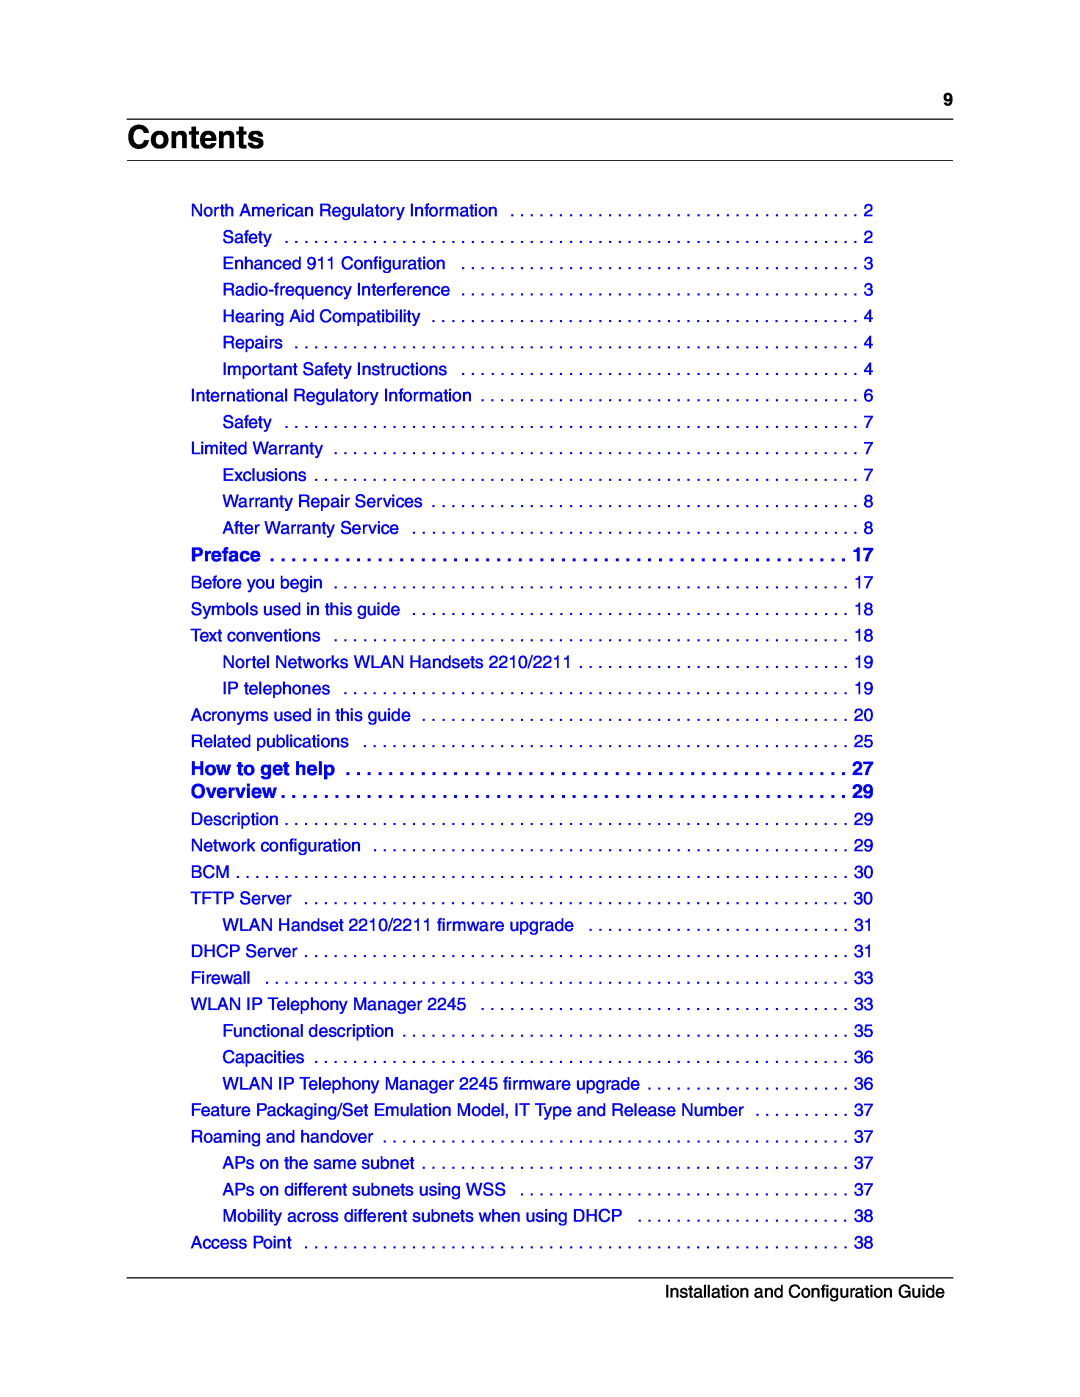 Nortel Networks MOG6xx, MOG7xx manual Contents, Preface 